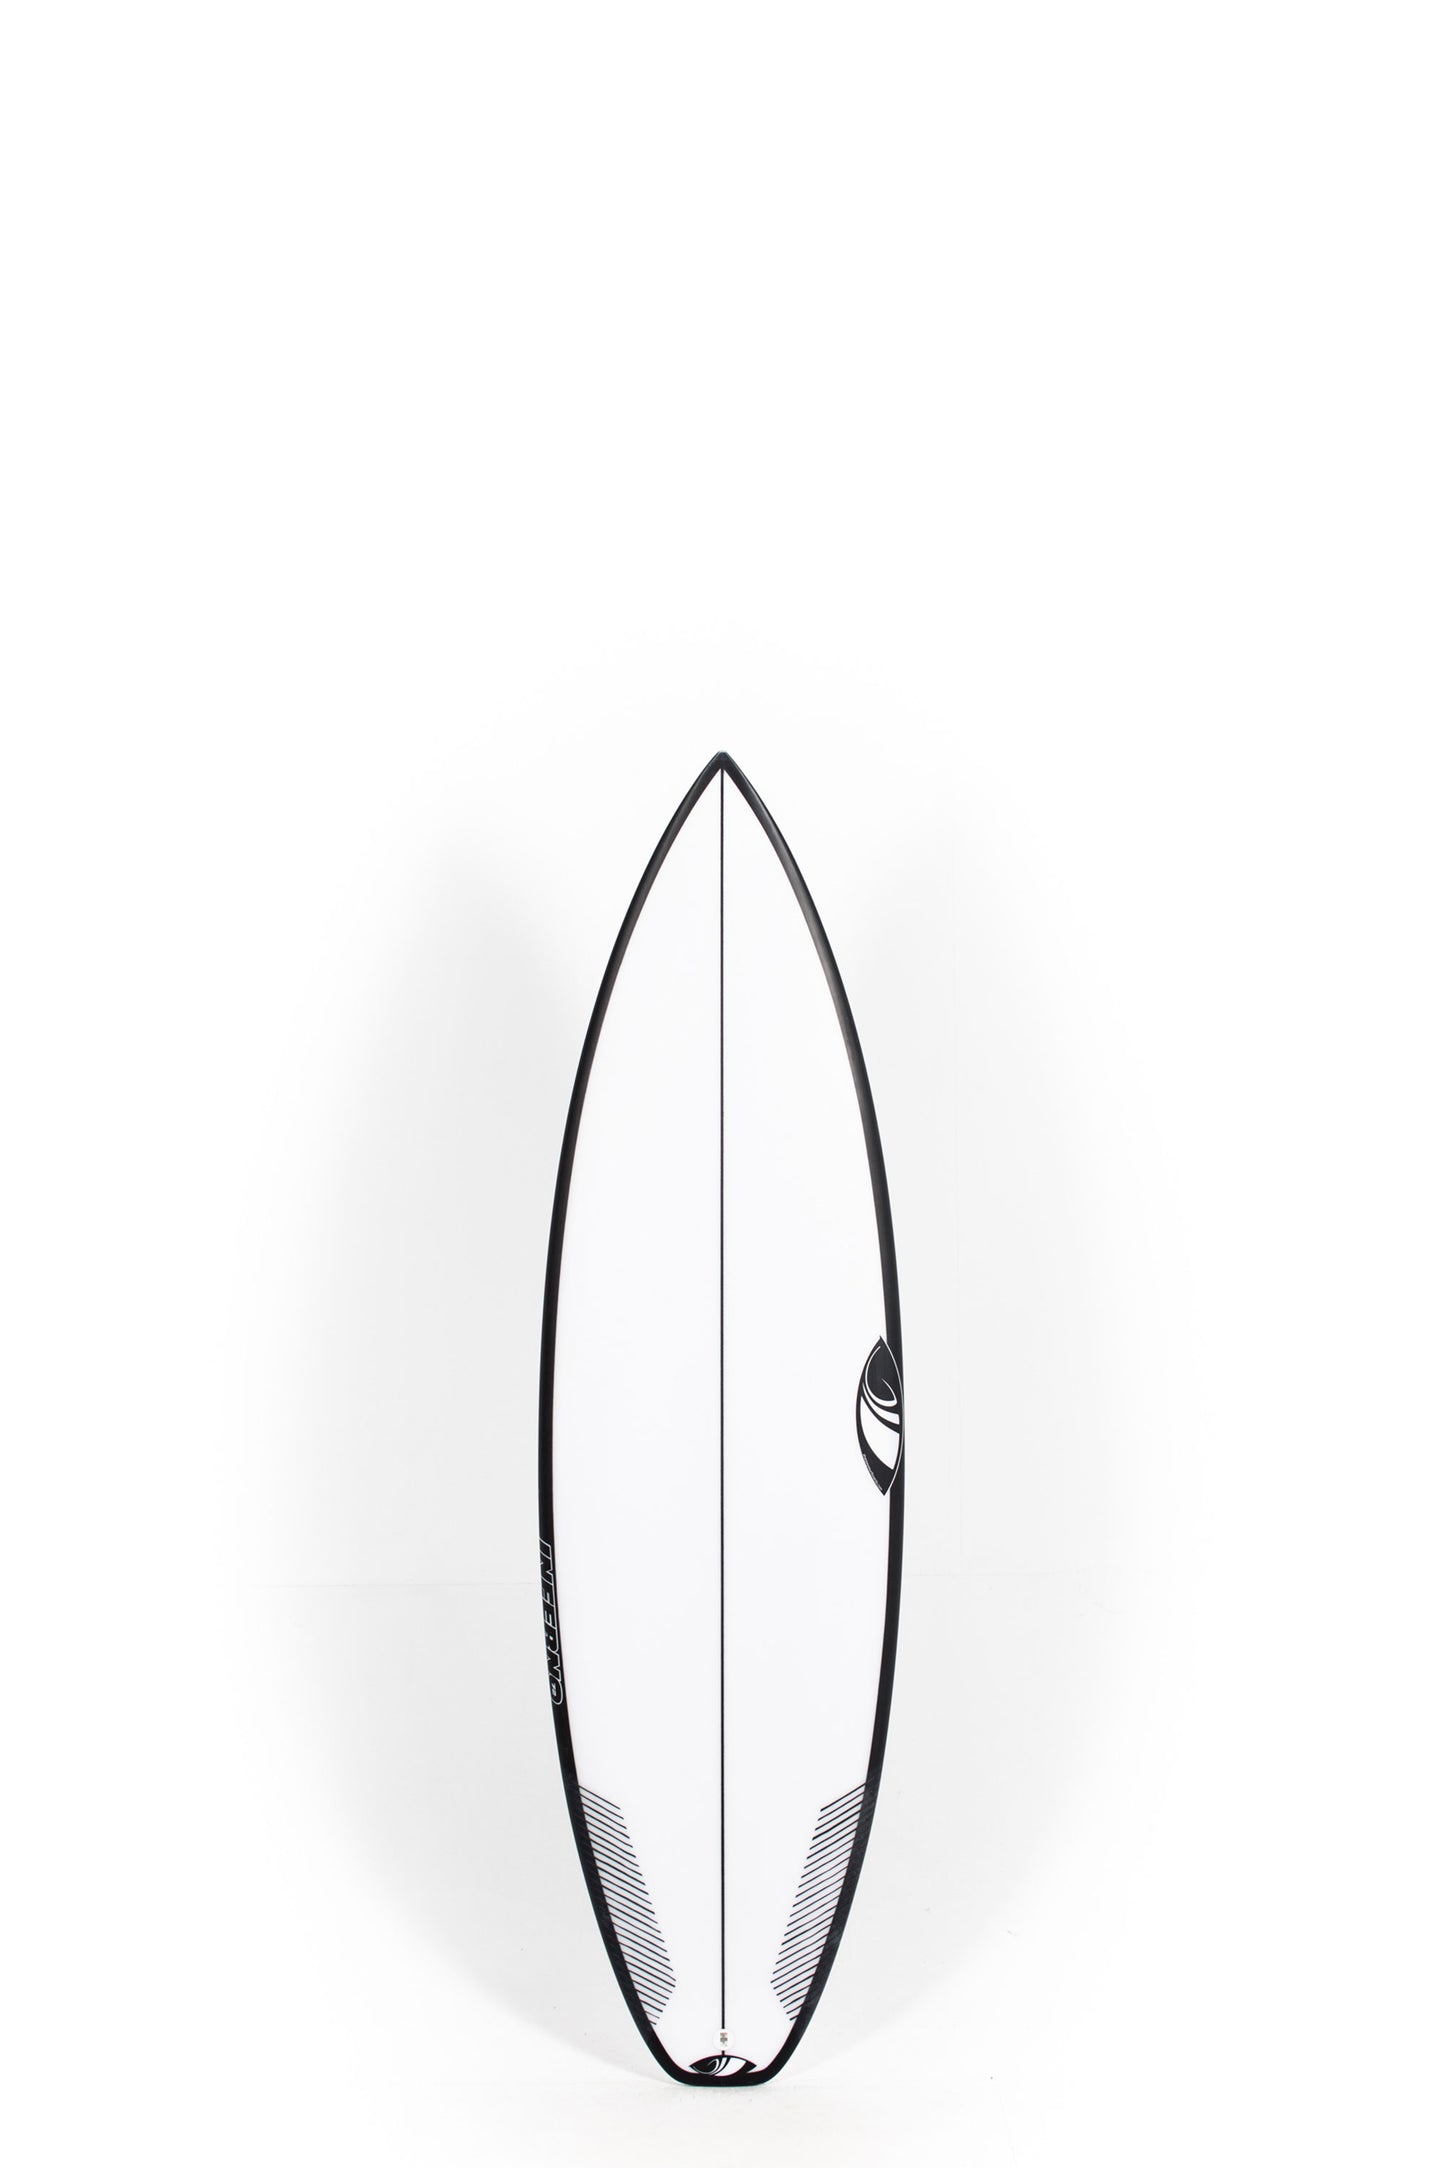 Pukas Surf Shop - Sharpeye Surfboards - INFERNO 72 PRO by Marcio Zouvi - 5'8" x 18 3/4 x 2 3/8 - 25.5L - INFERNOPRO